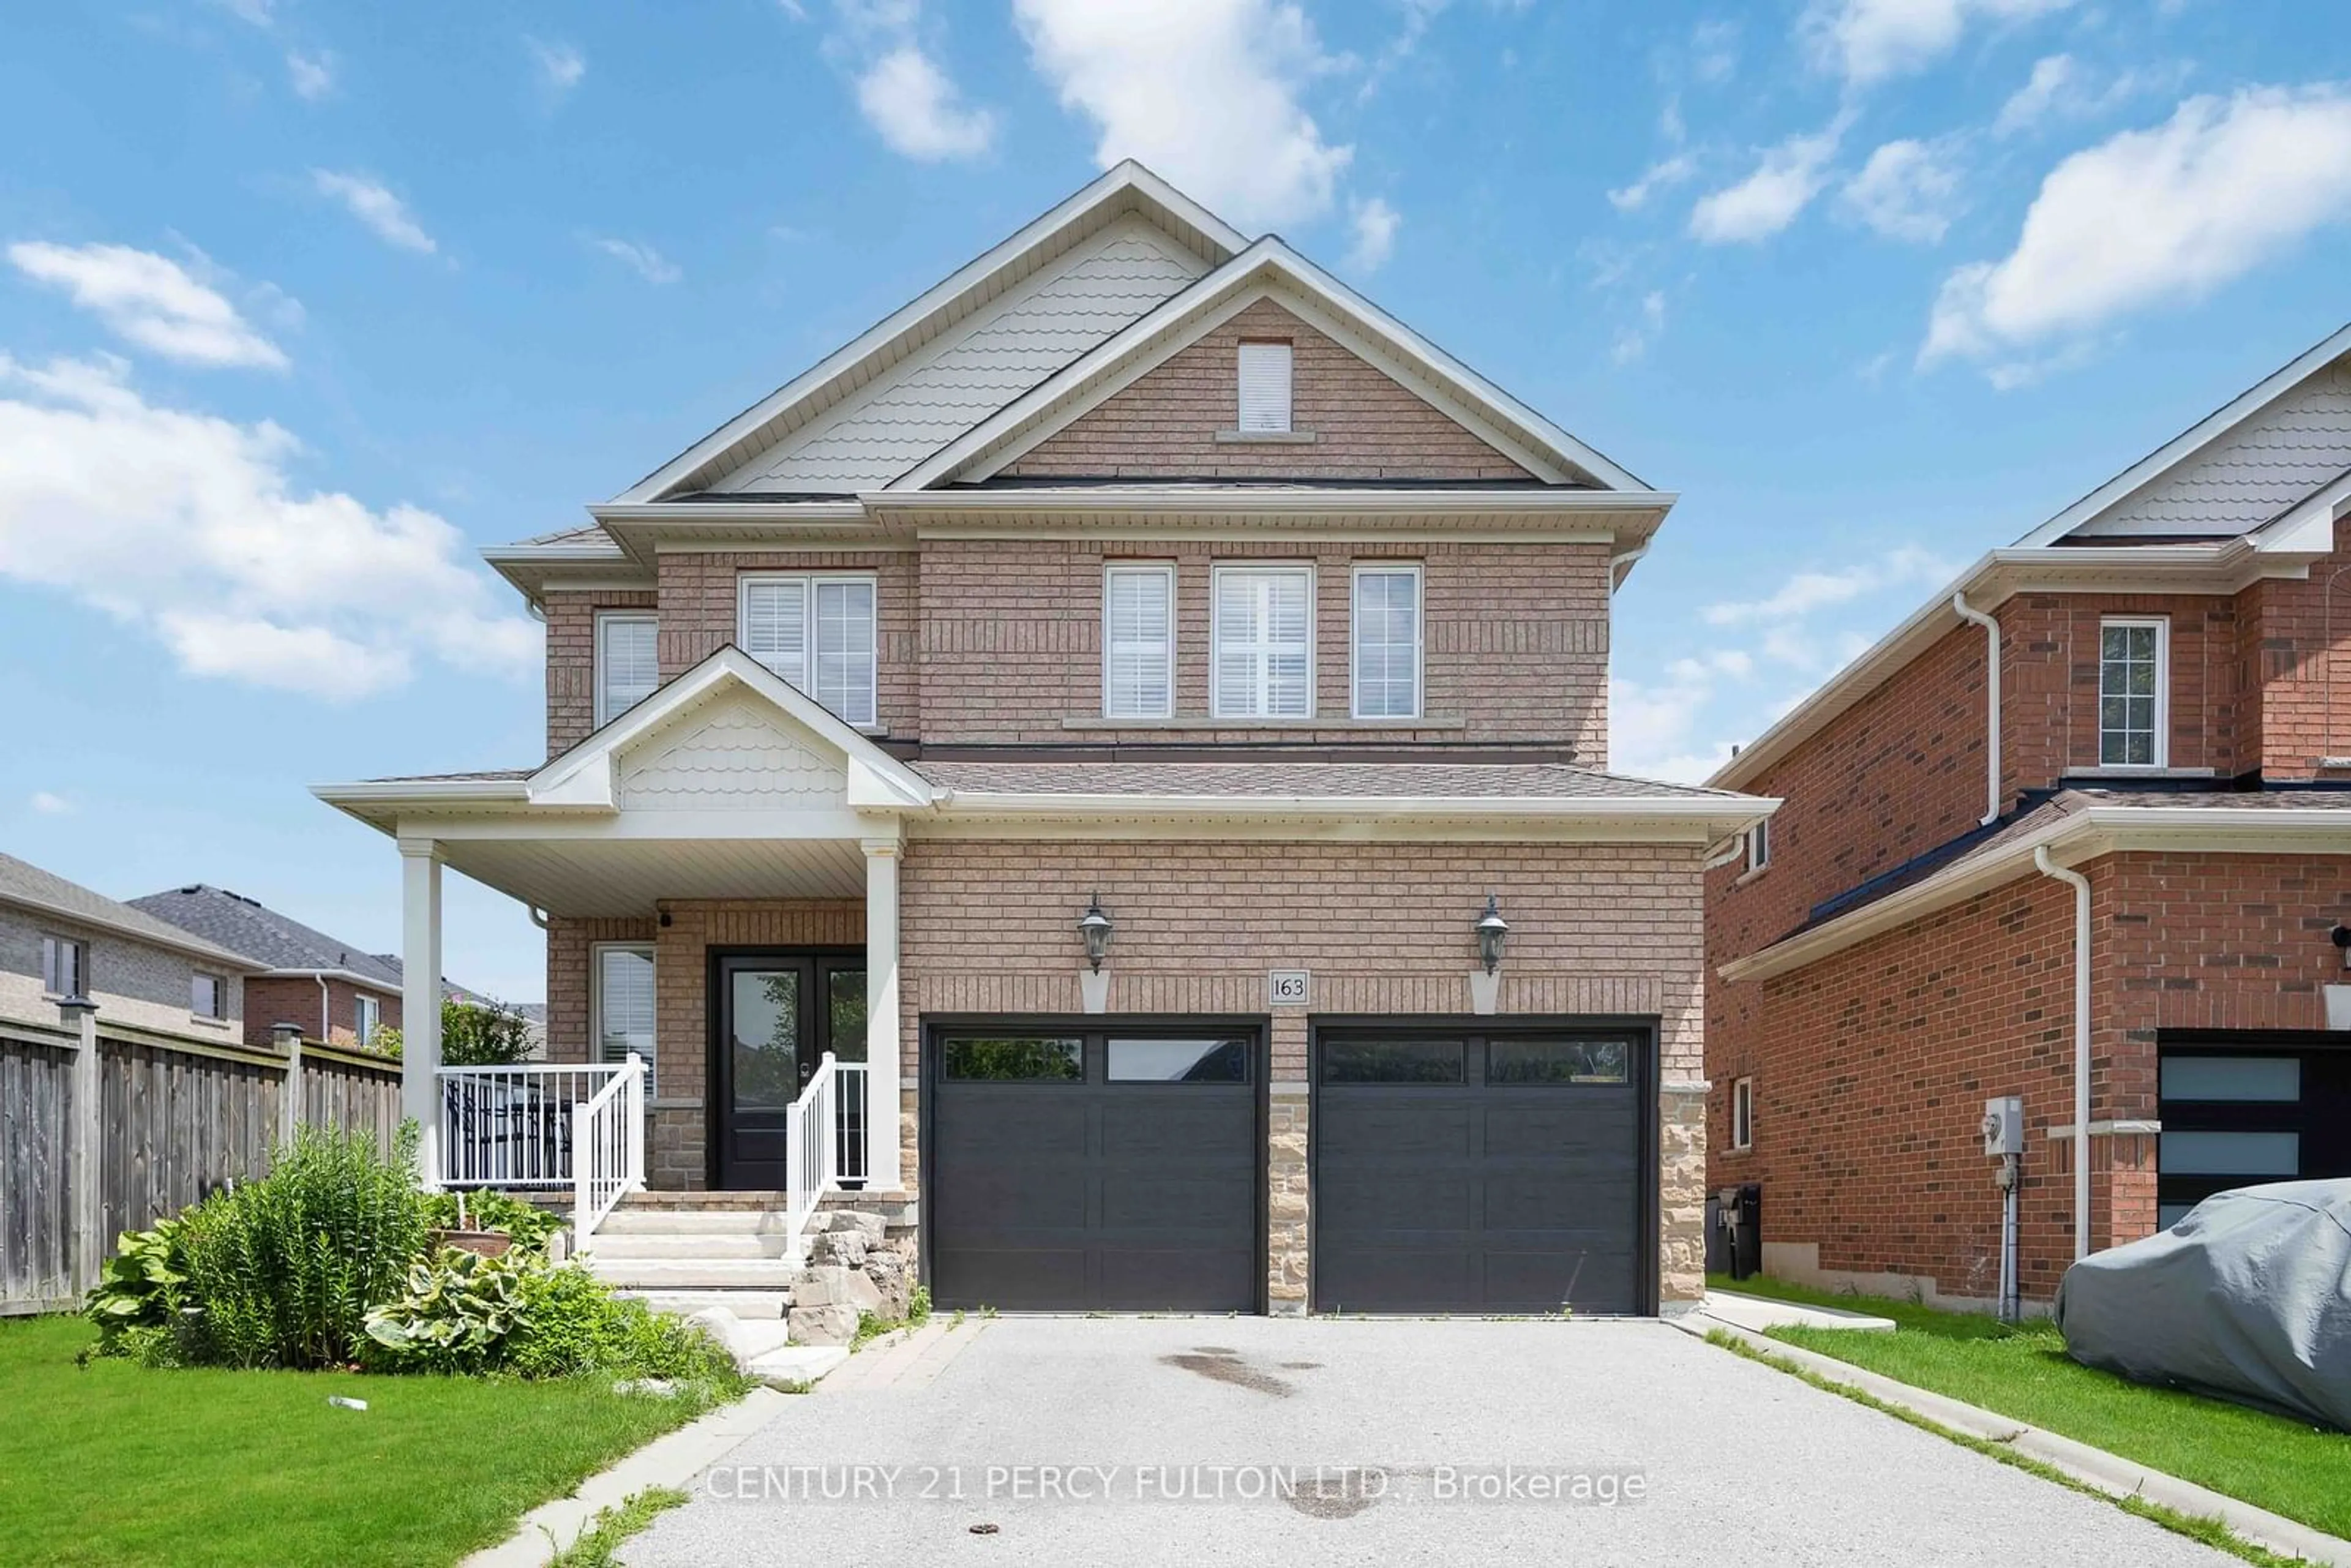 Home with brick exterior material for 163 Robert Adams Dr, Clarington Ontario L1E 3H9